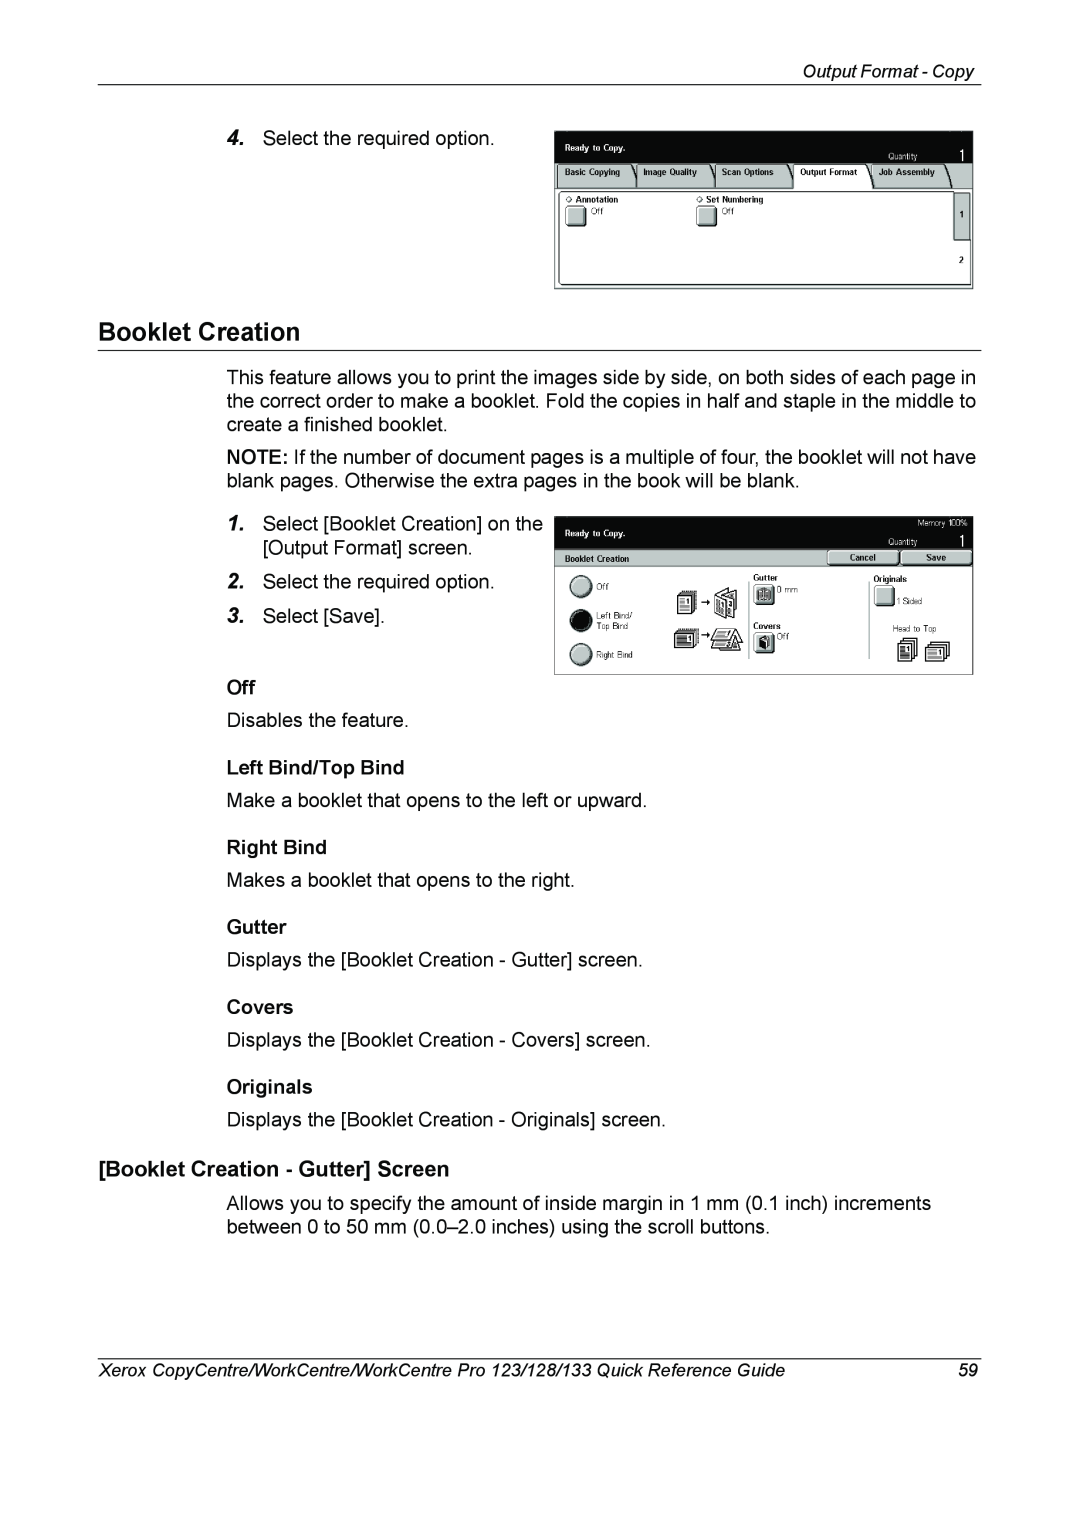 Xerox 604P18037 manual Booklet Creation - Gutter Screen, Left Bind/Top Bind, Right Bind, Covers, Originals 